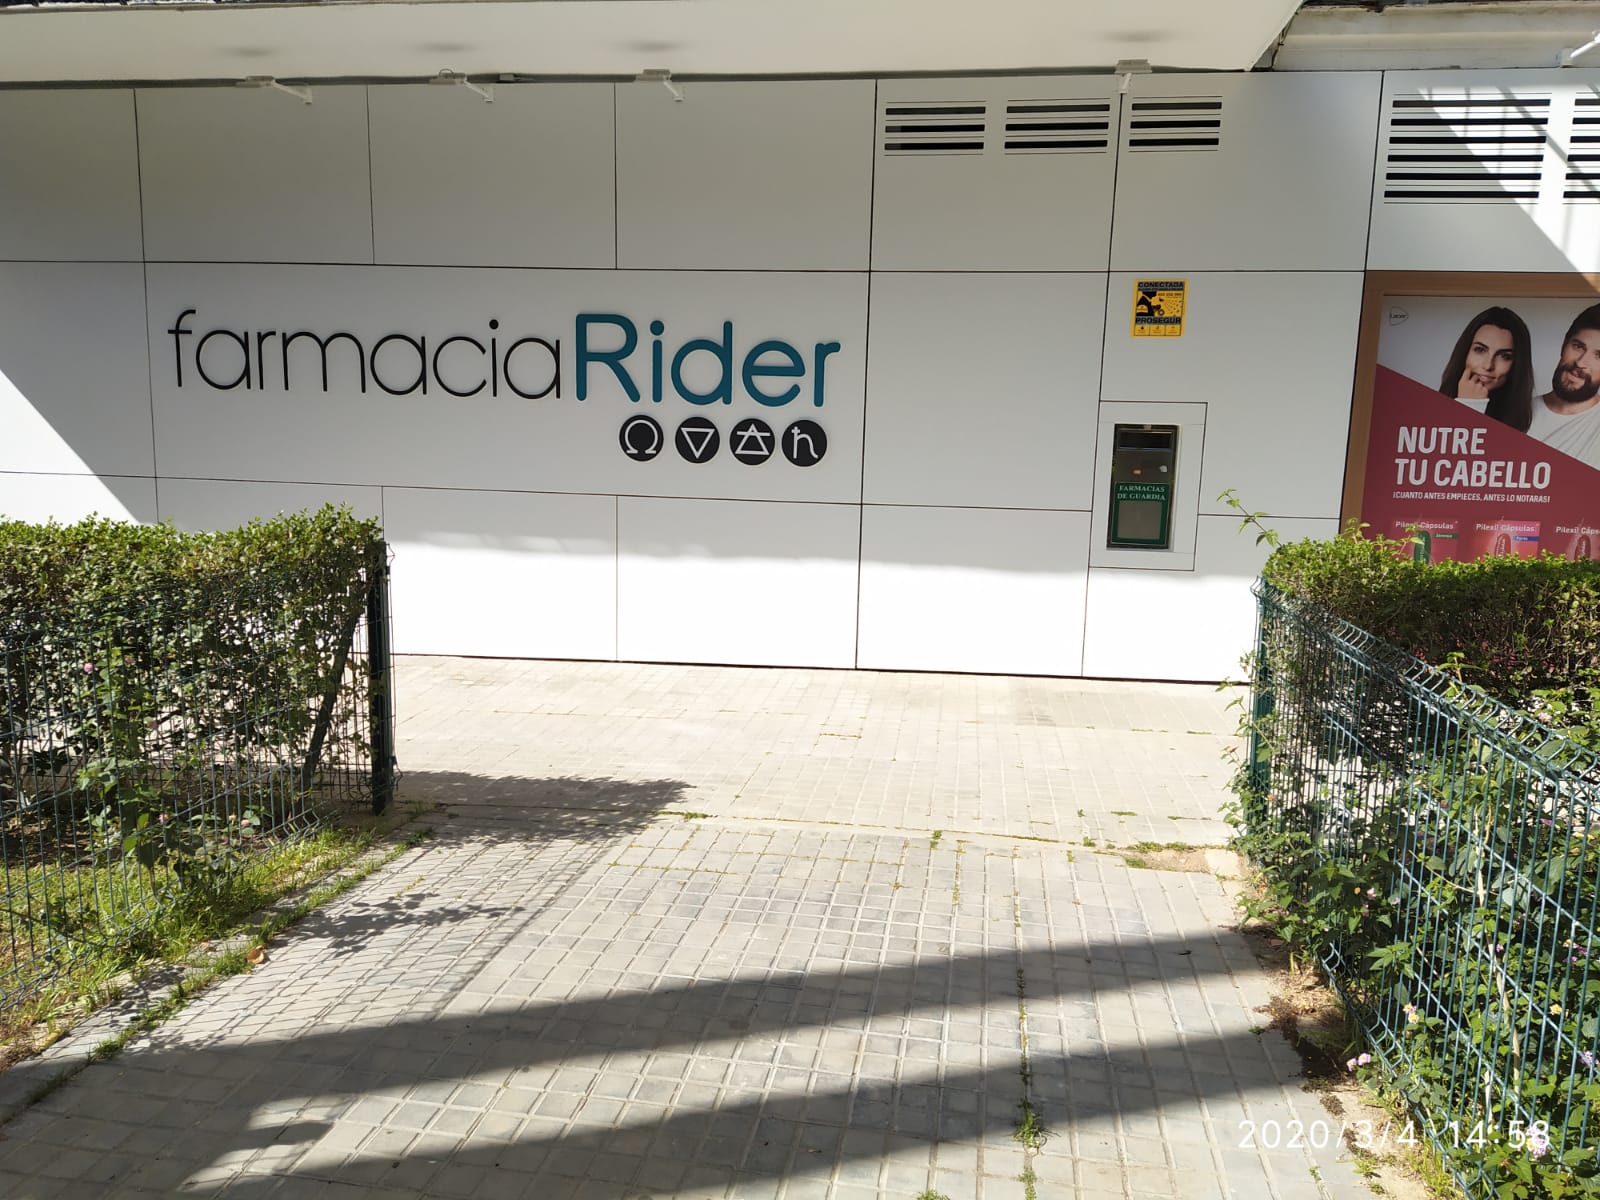 Images Farmacia Rider